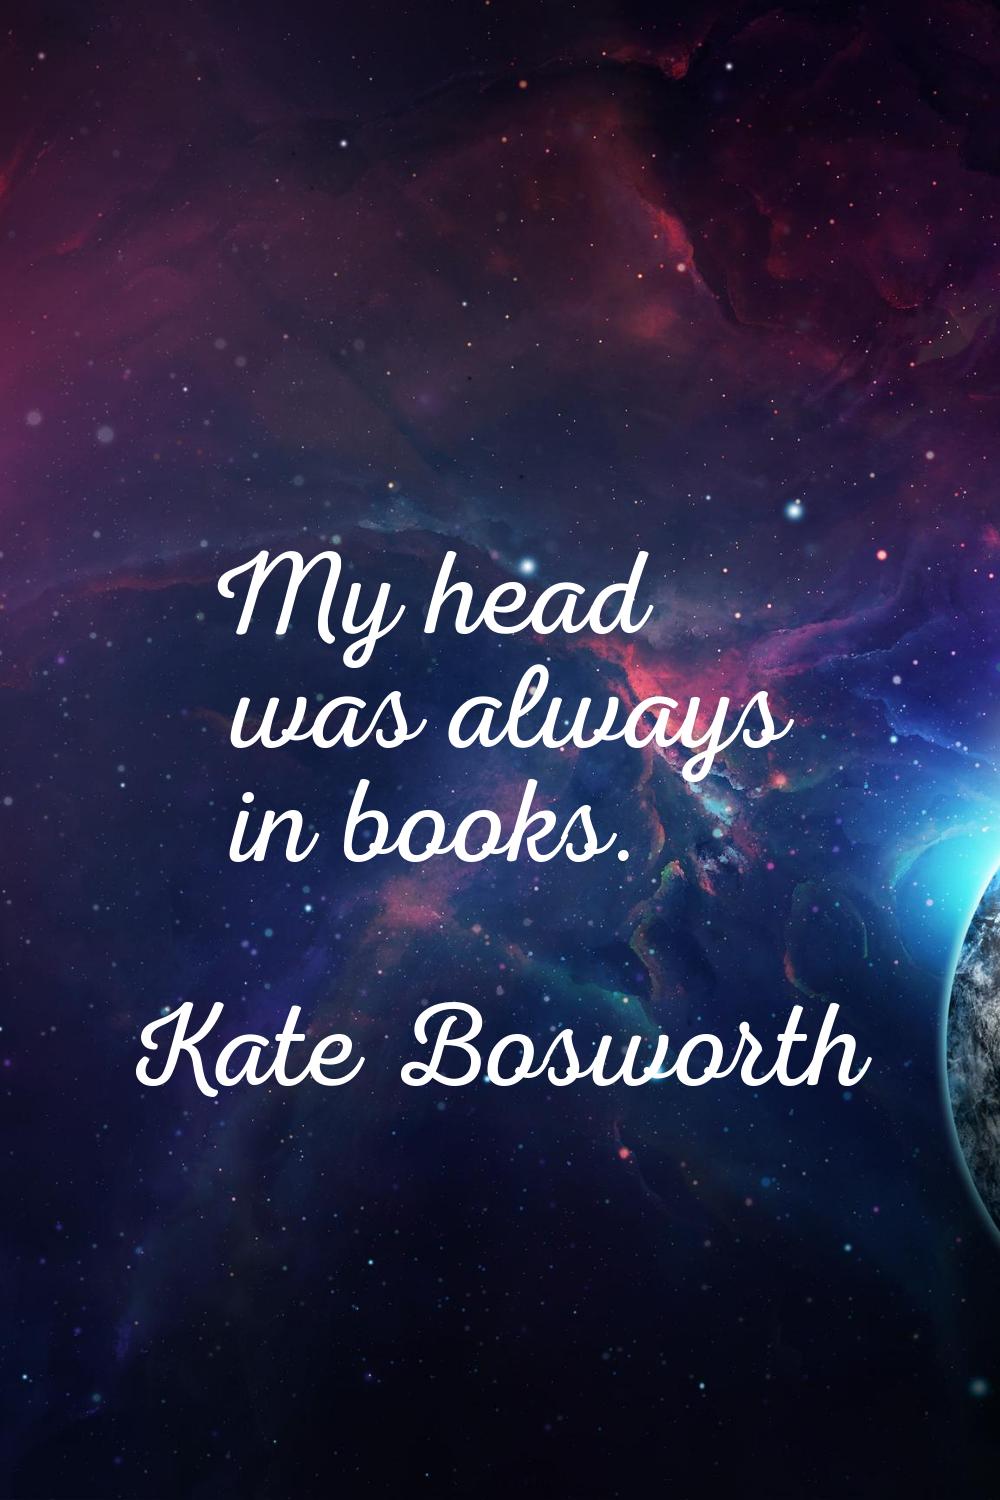 My head was always in books.